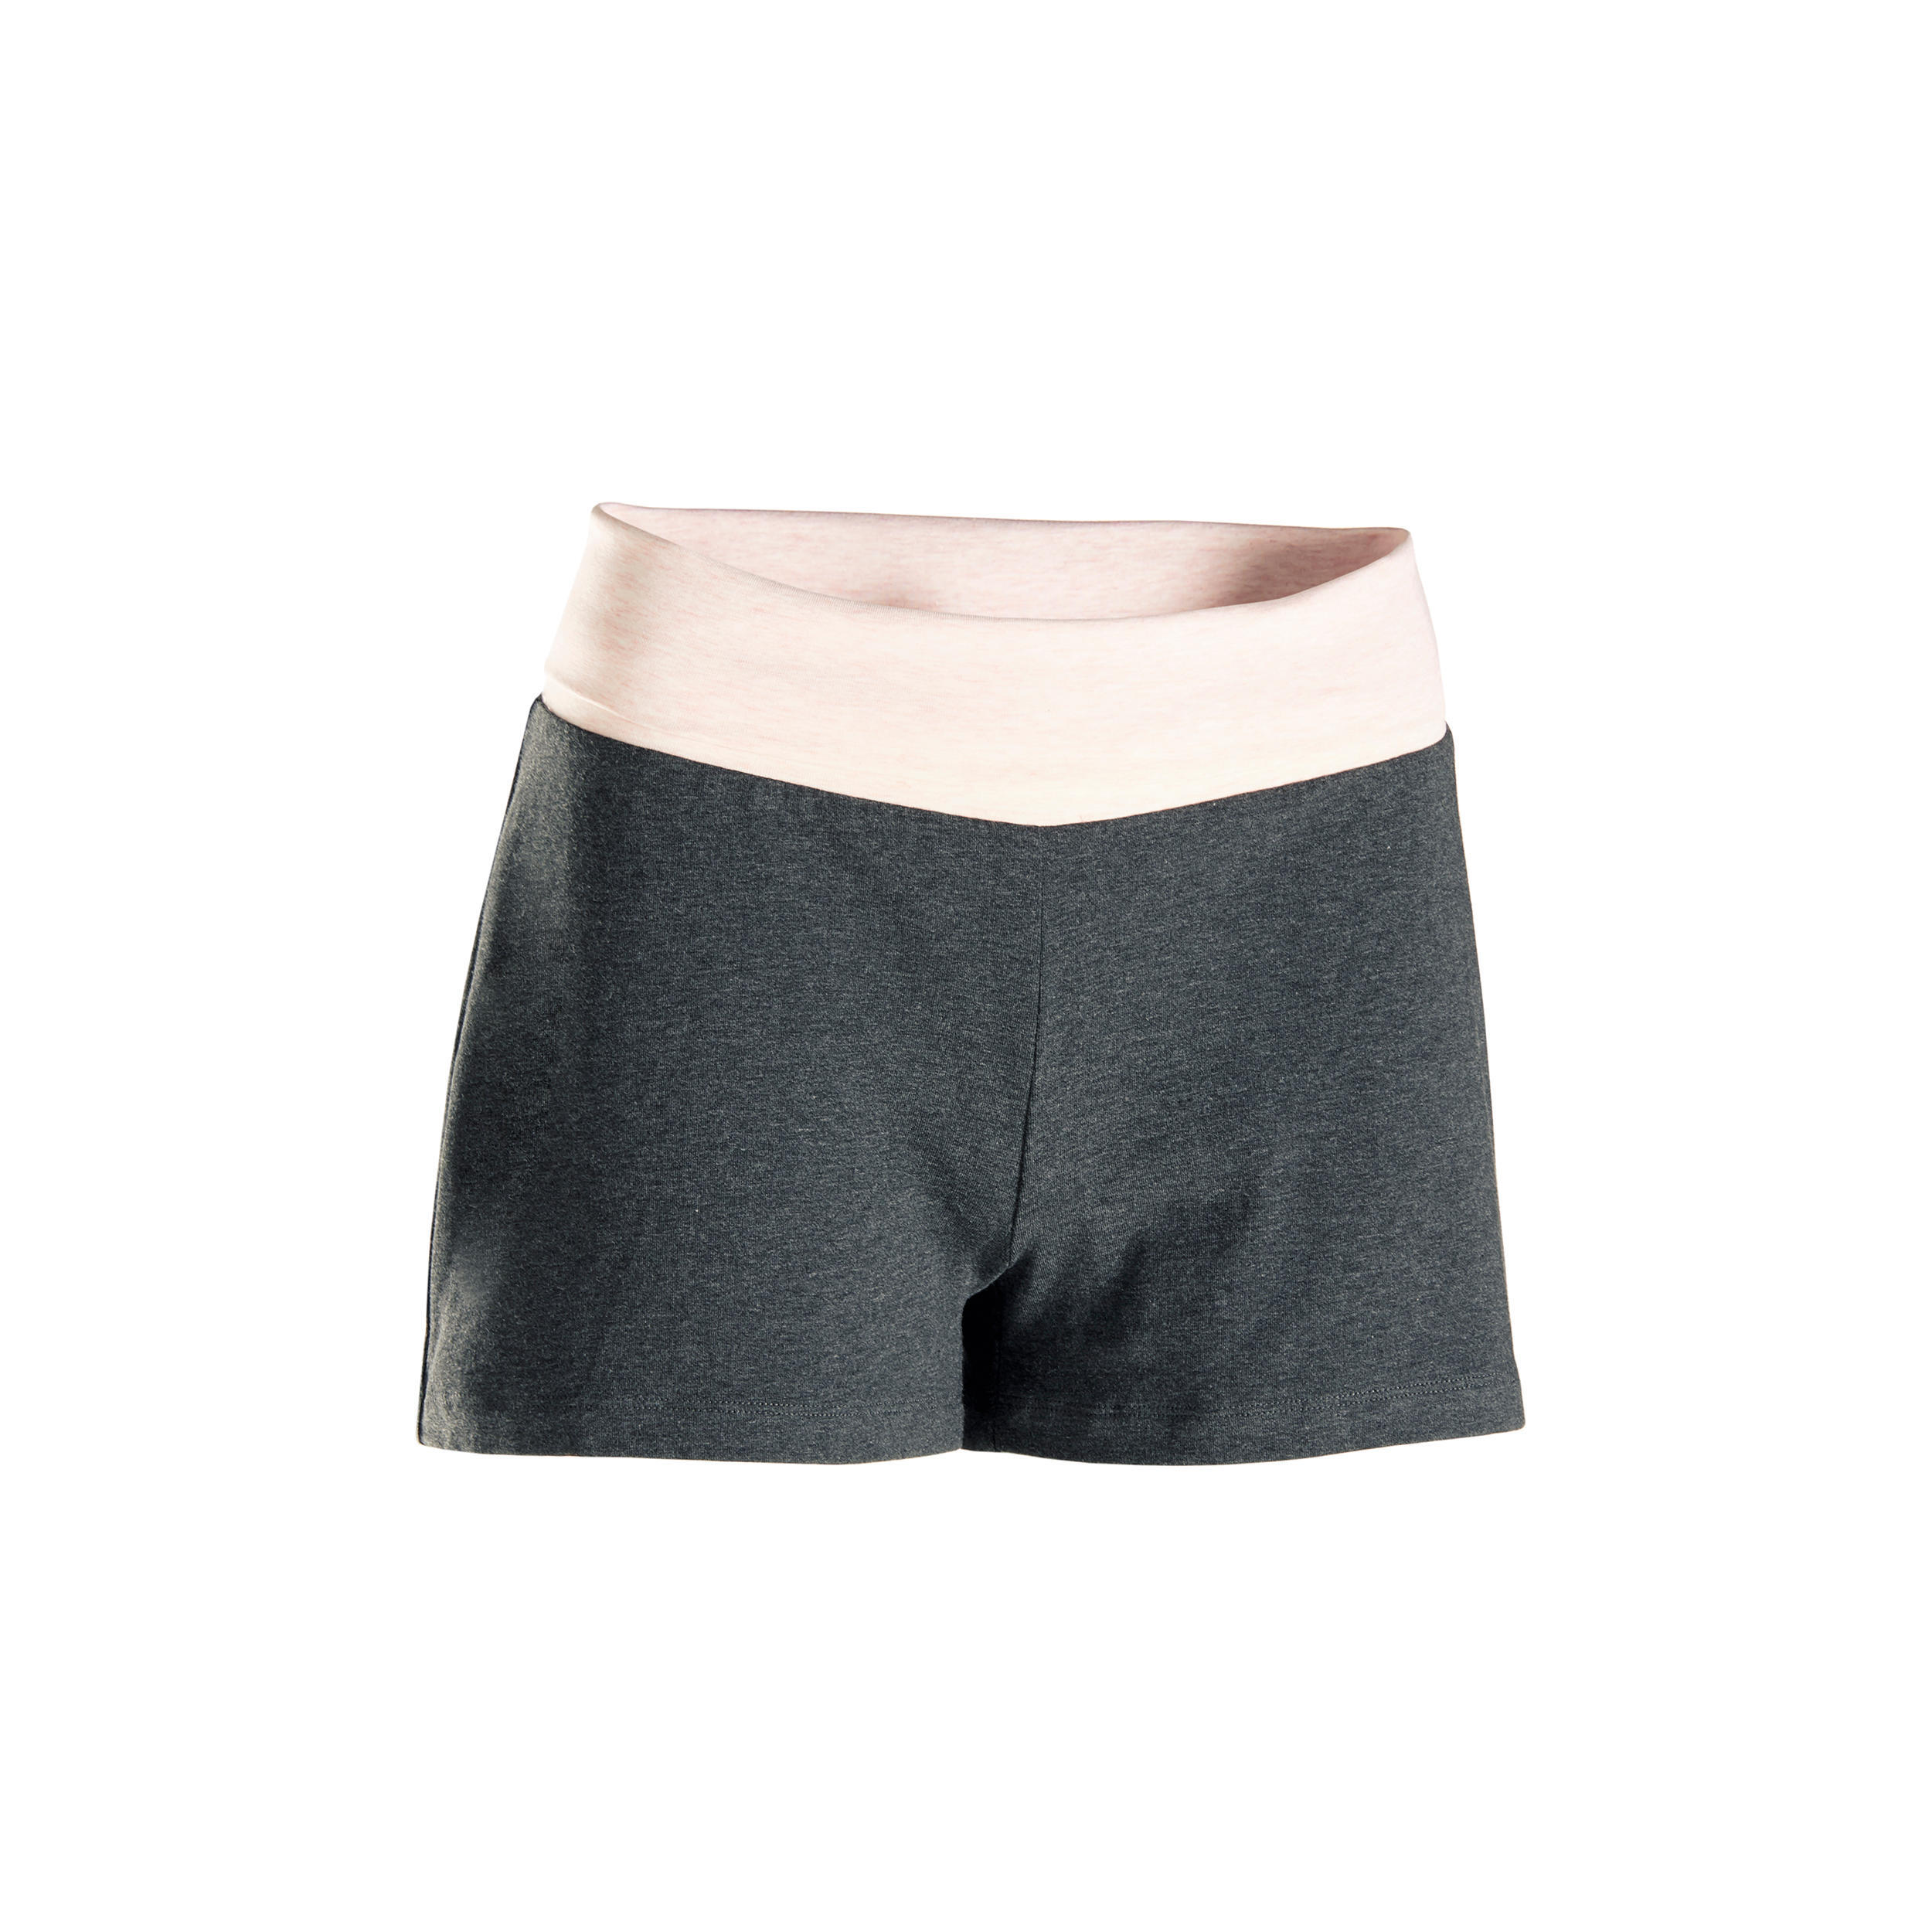 Women's Cotton Yoga Shorts - Grey/Pink 2/9